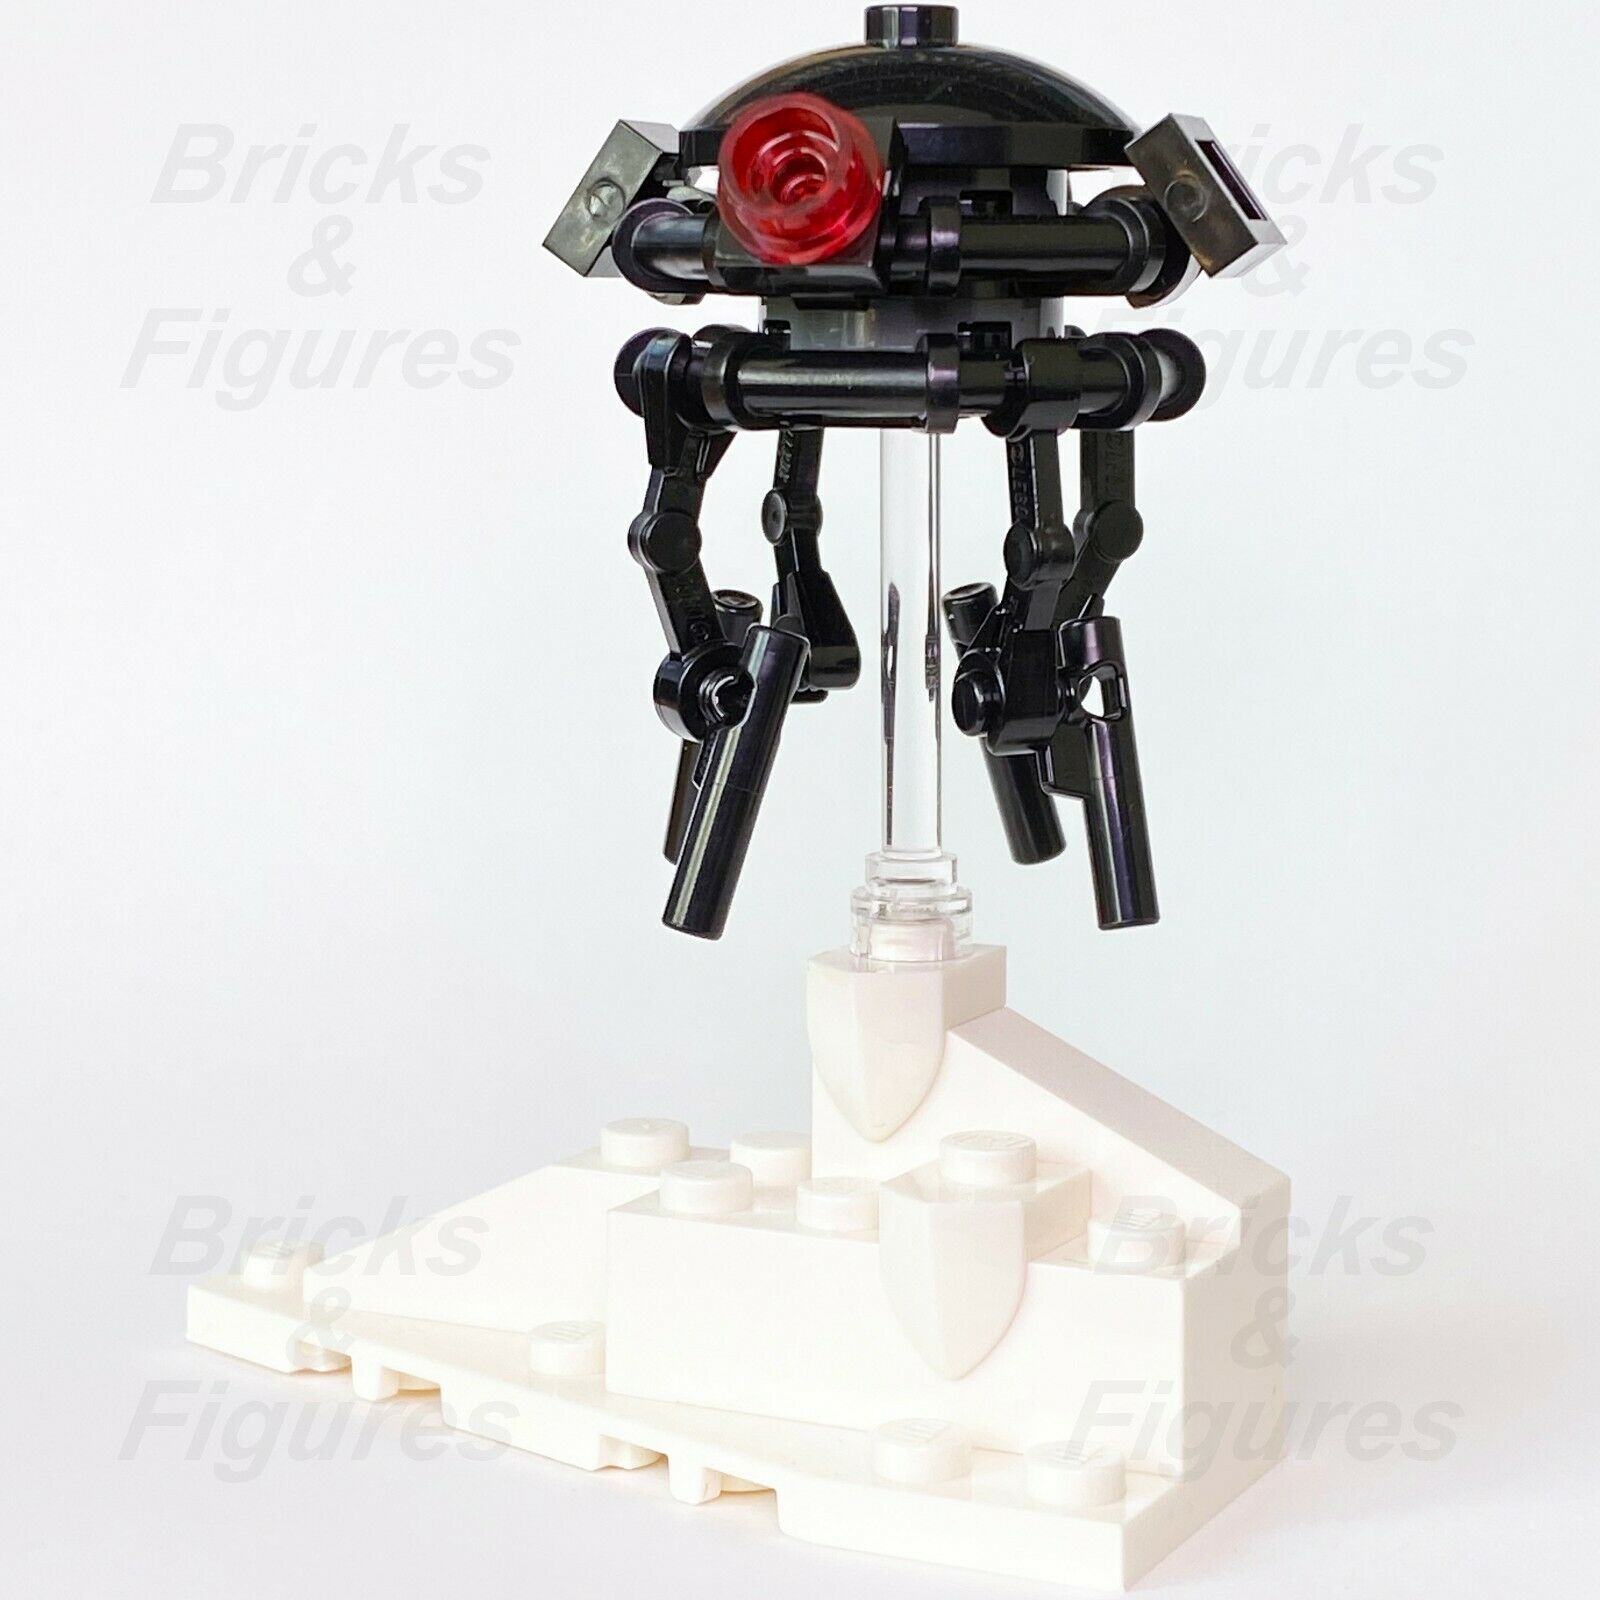 Star Wars LEGO Imperial Probe Droid Empire Strikes Back Foil Pack Minifigure - Bricks & Figures